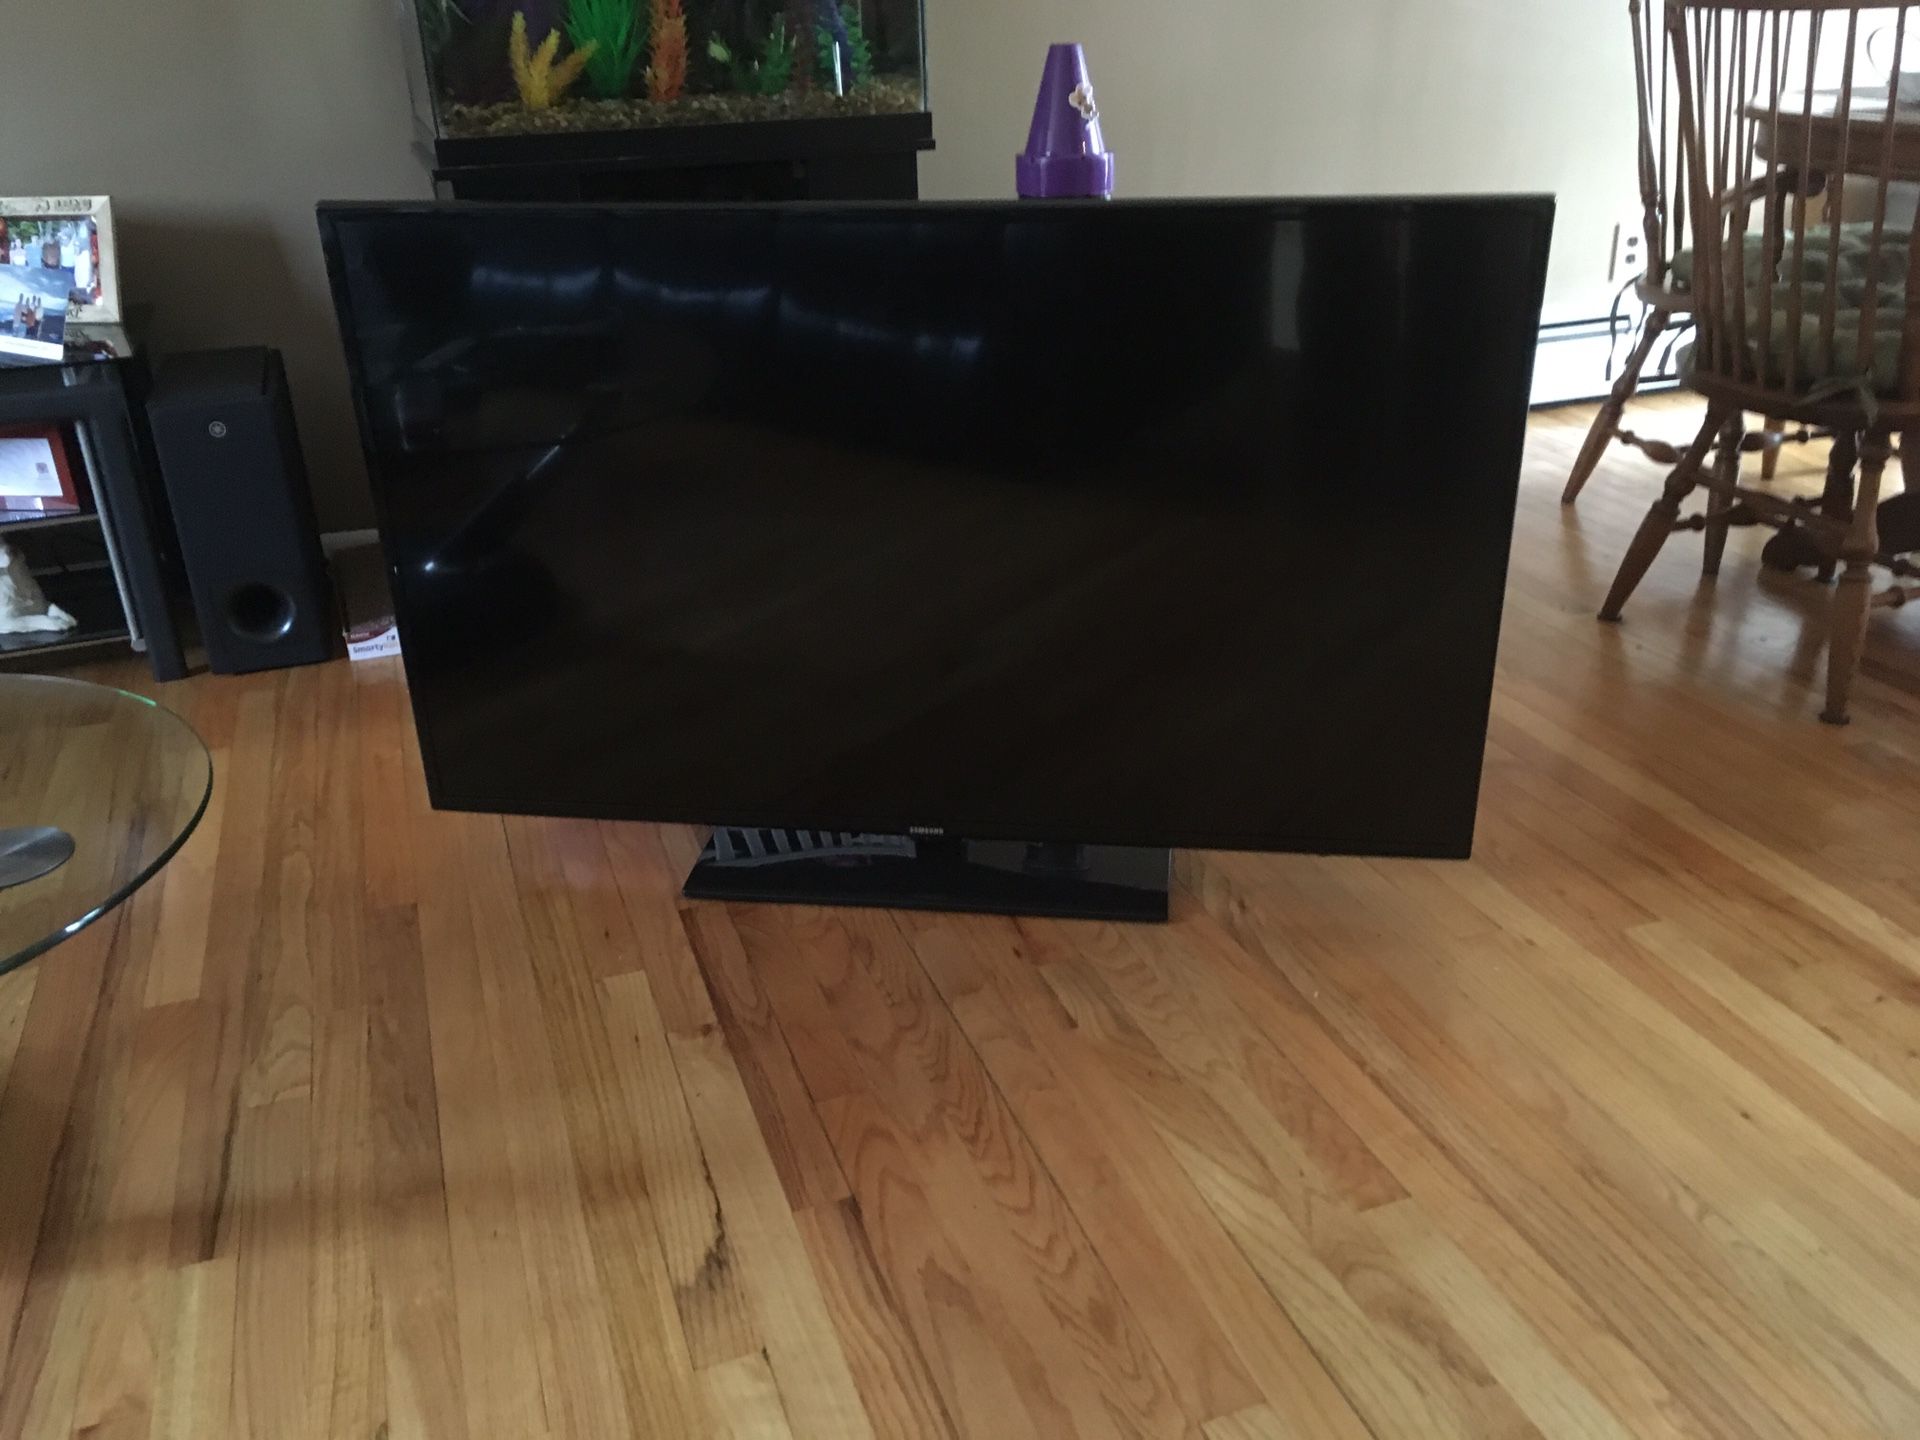 55” Samsung Smart TV with black glass stand